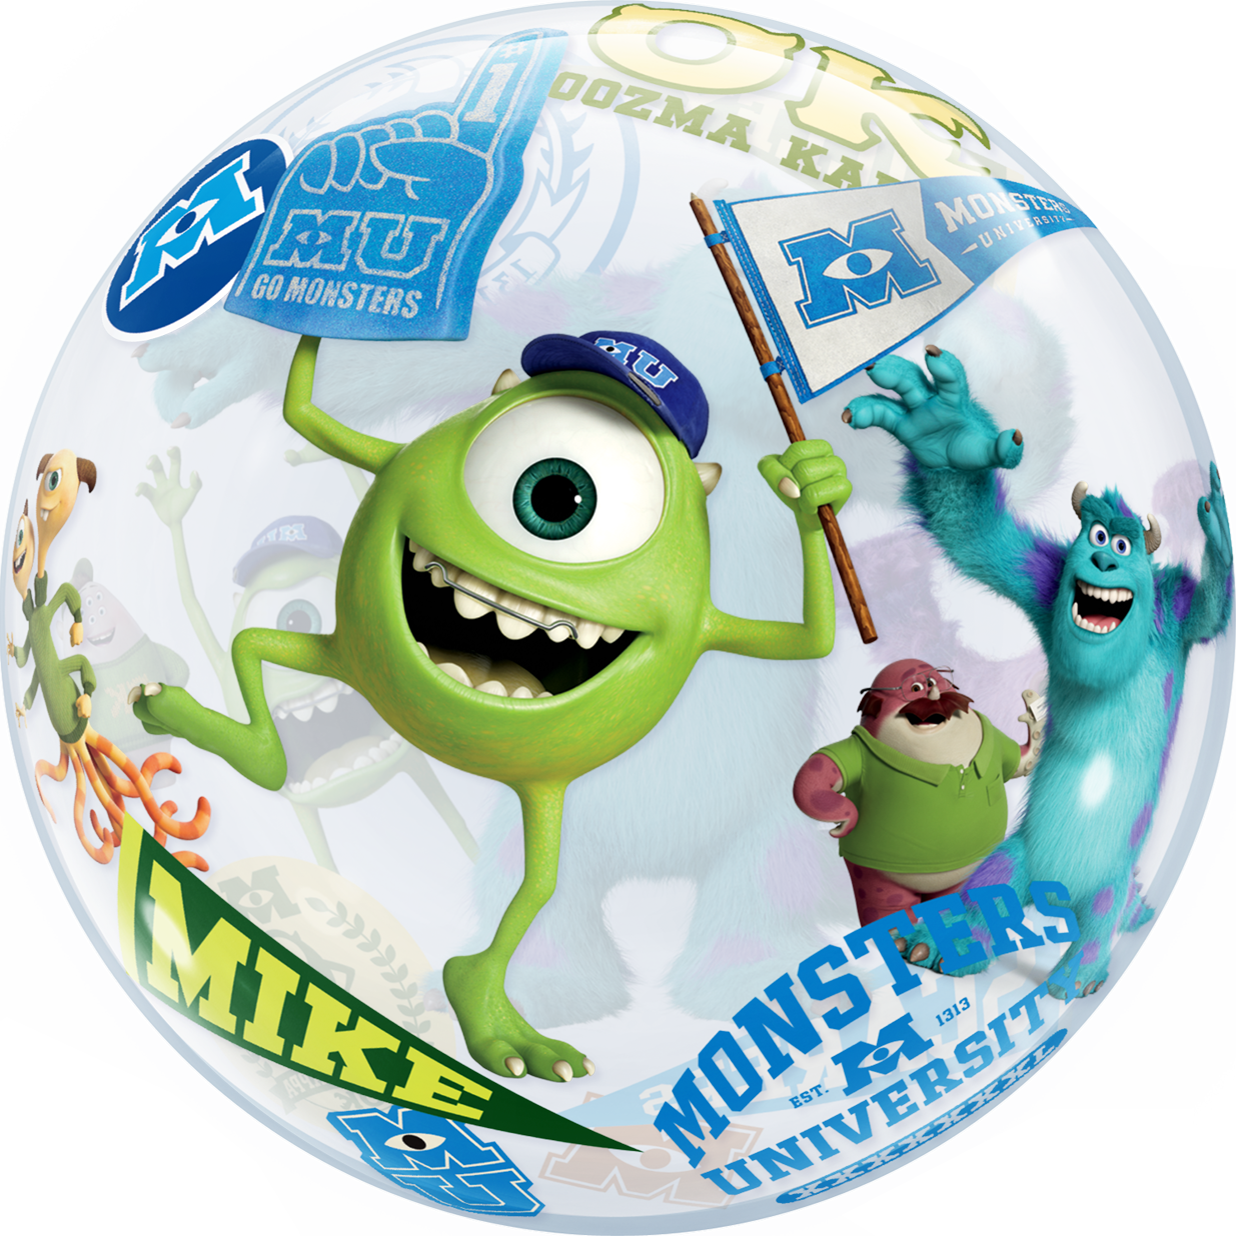 Disney-Pixar Monsters University Bubble Balloon